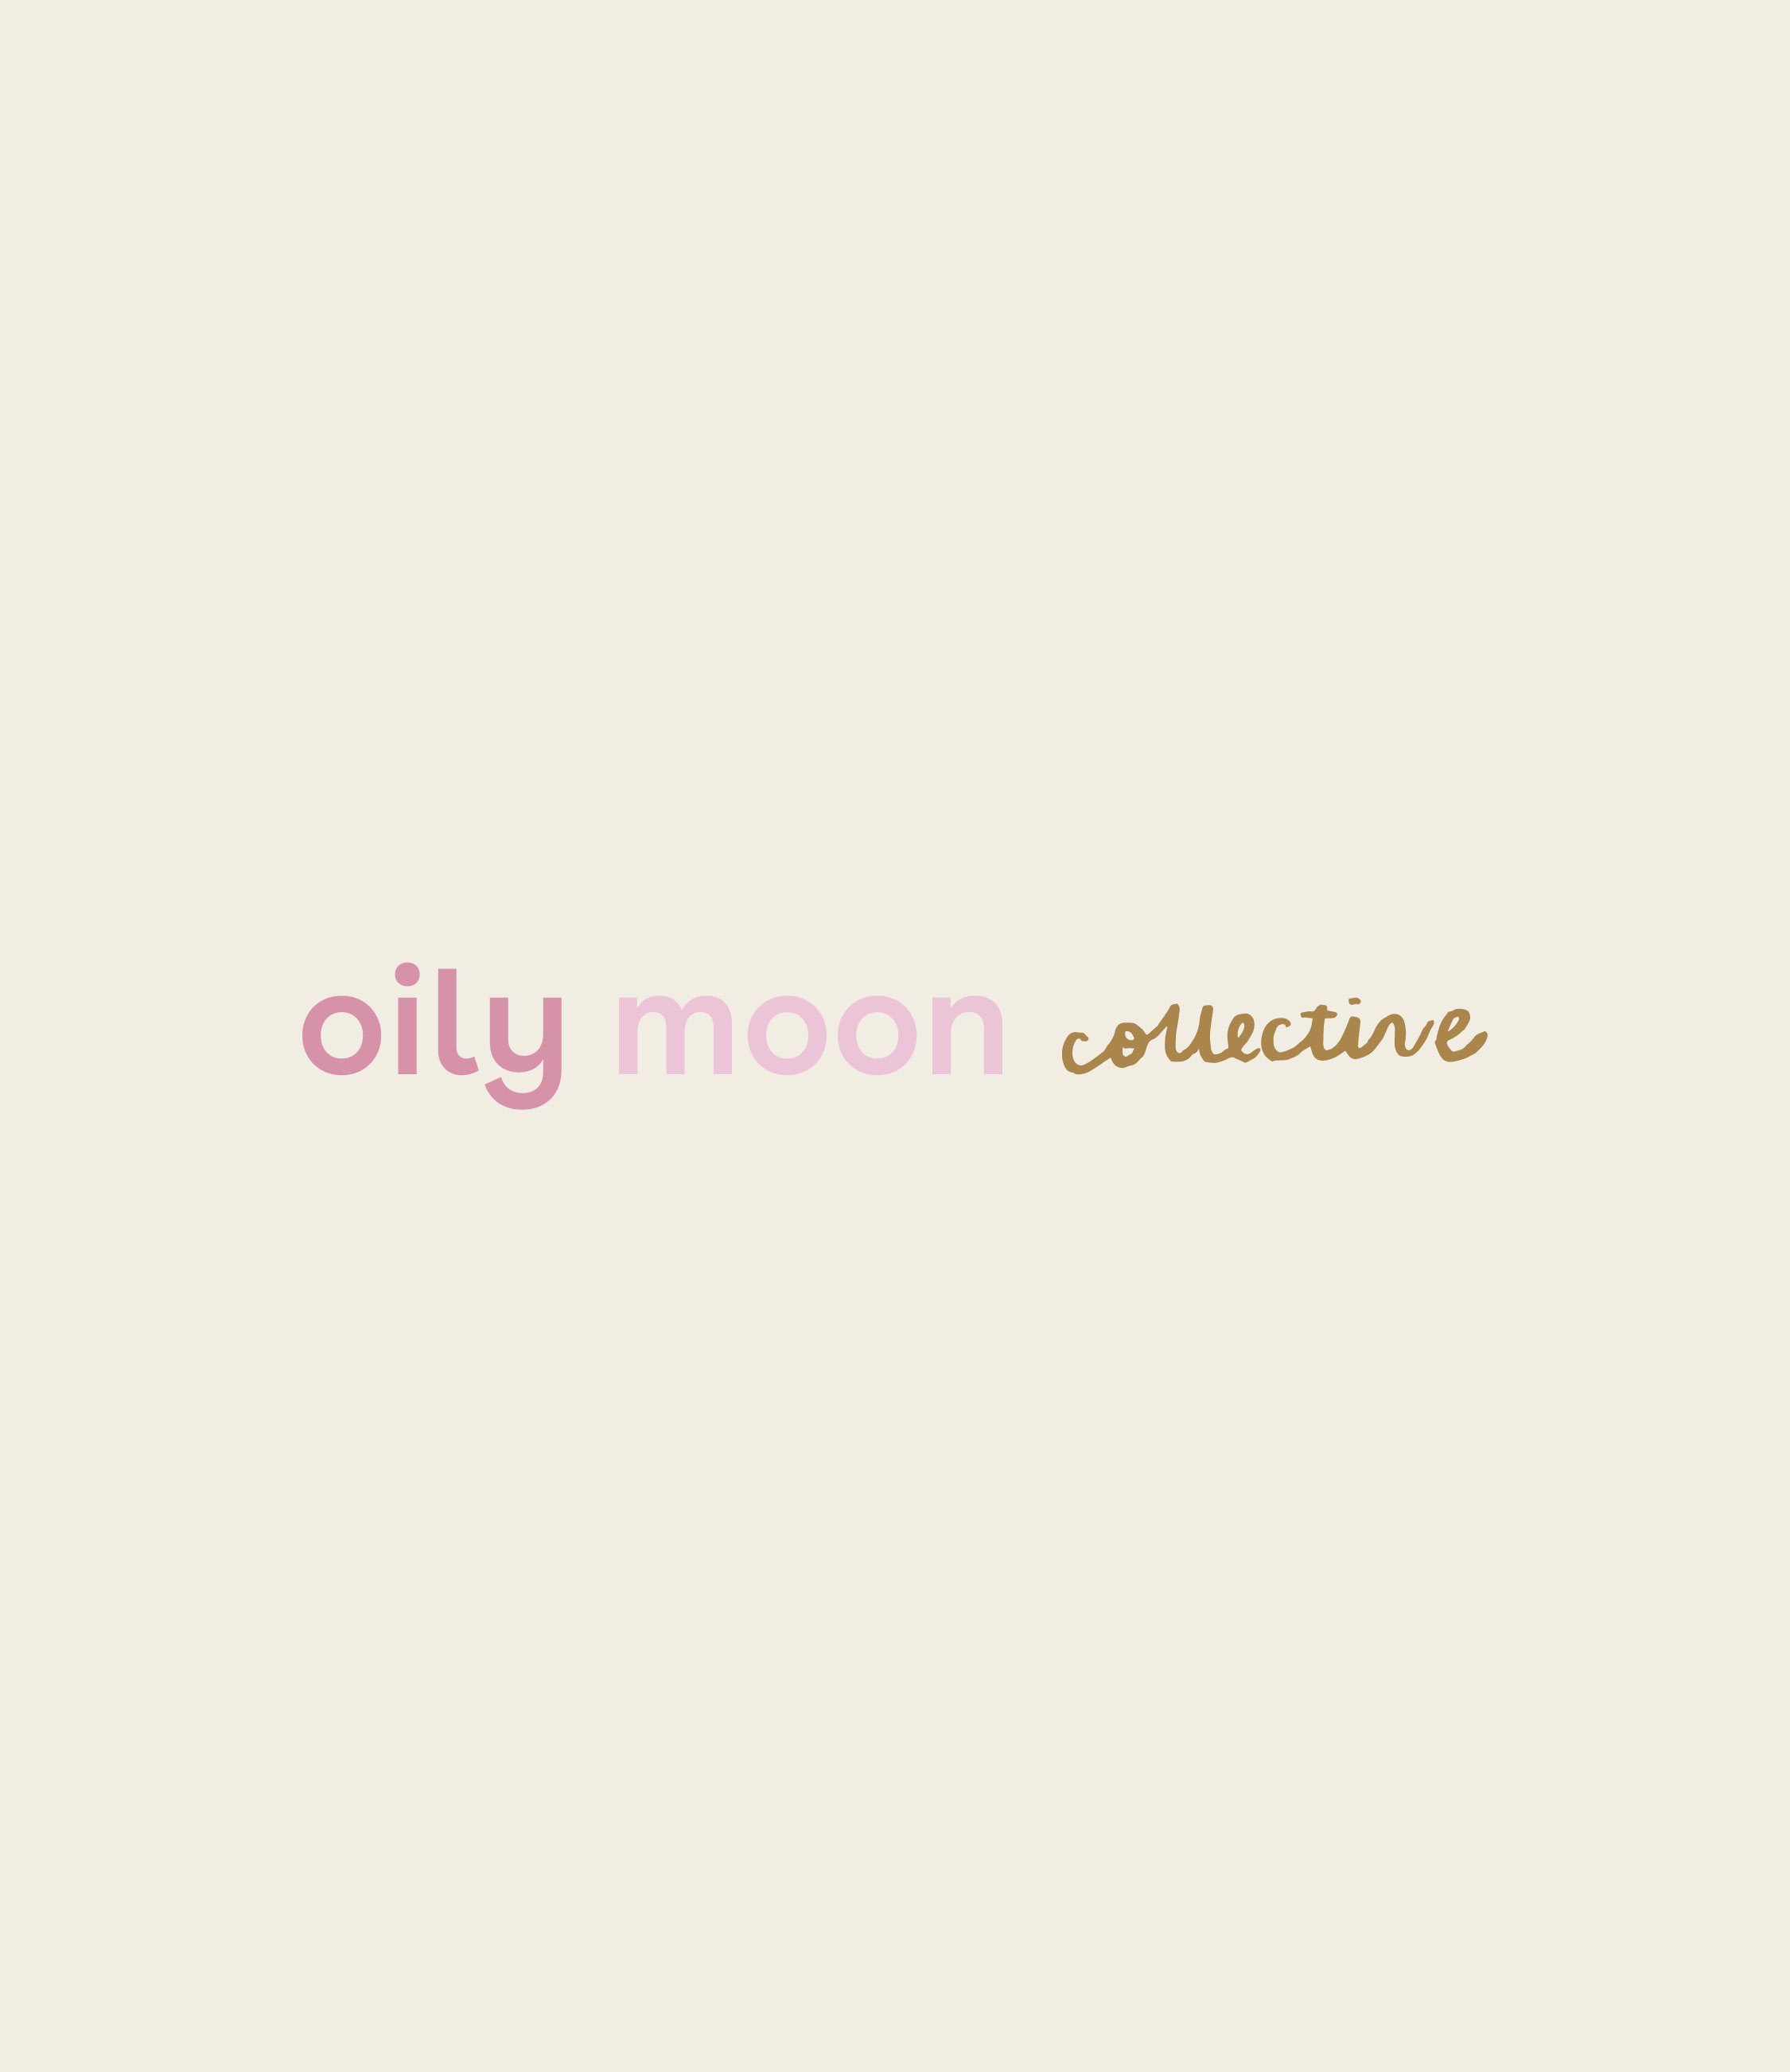 OilyMoon_LaunchGraphics3.jpg